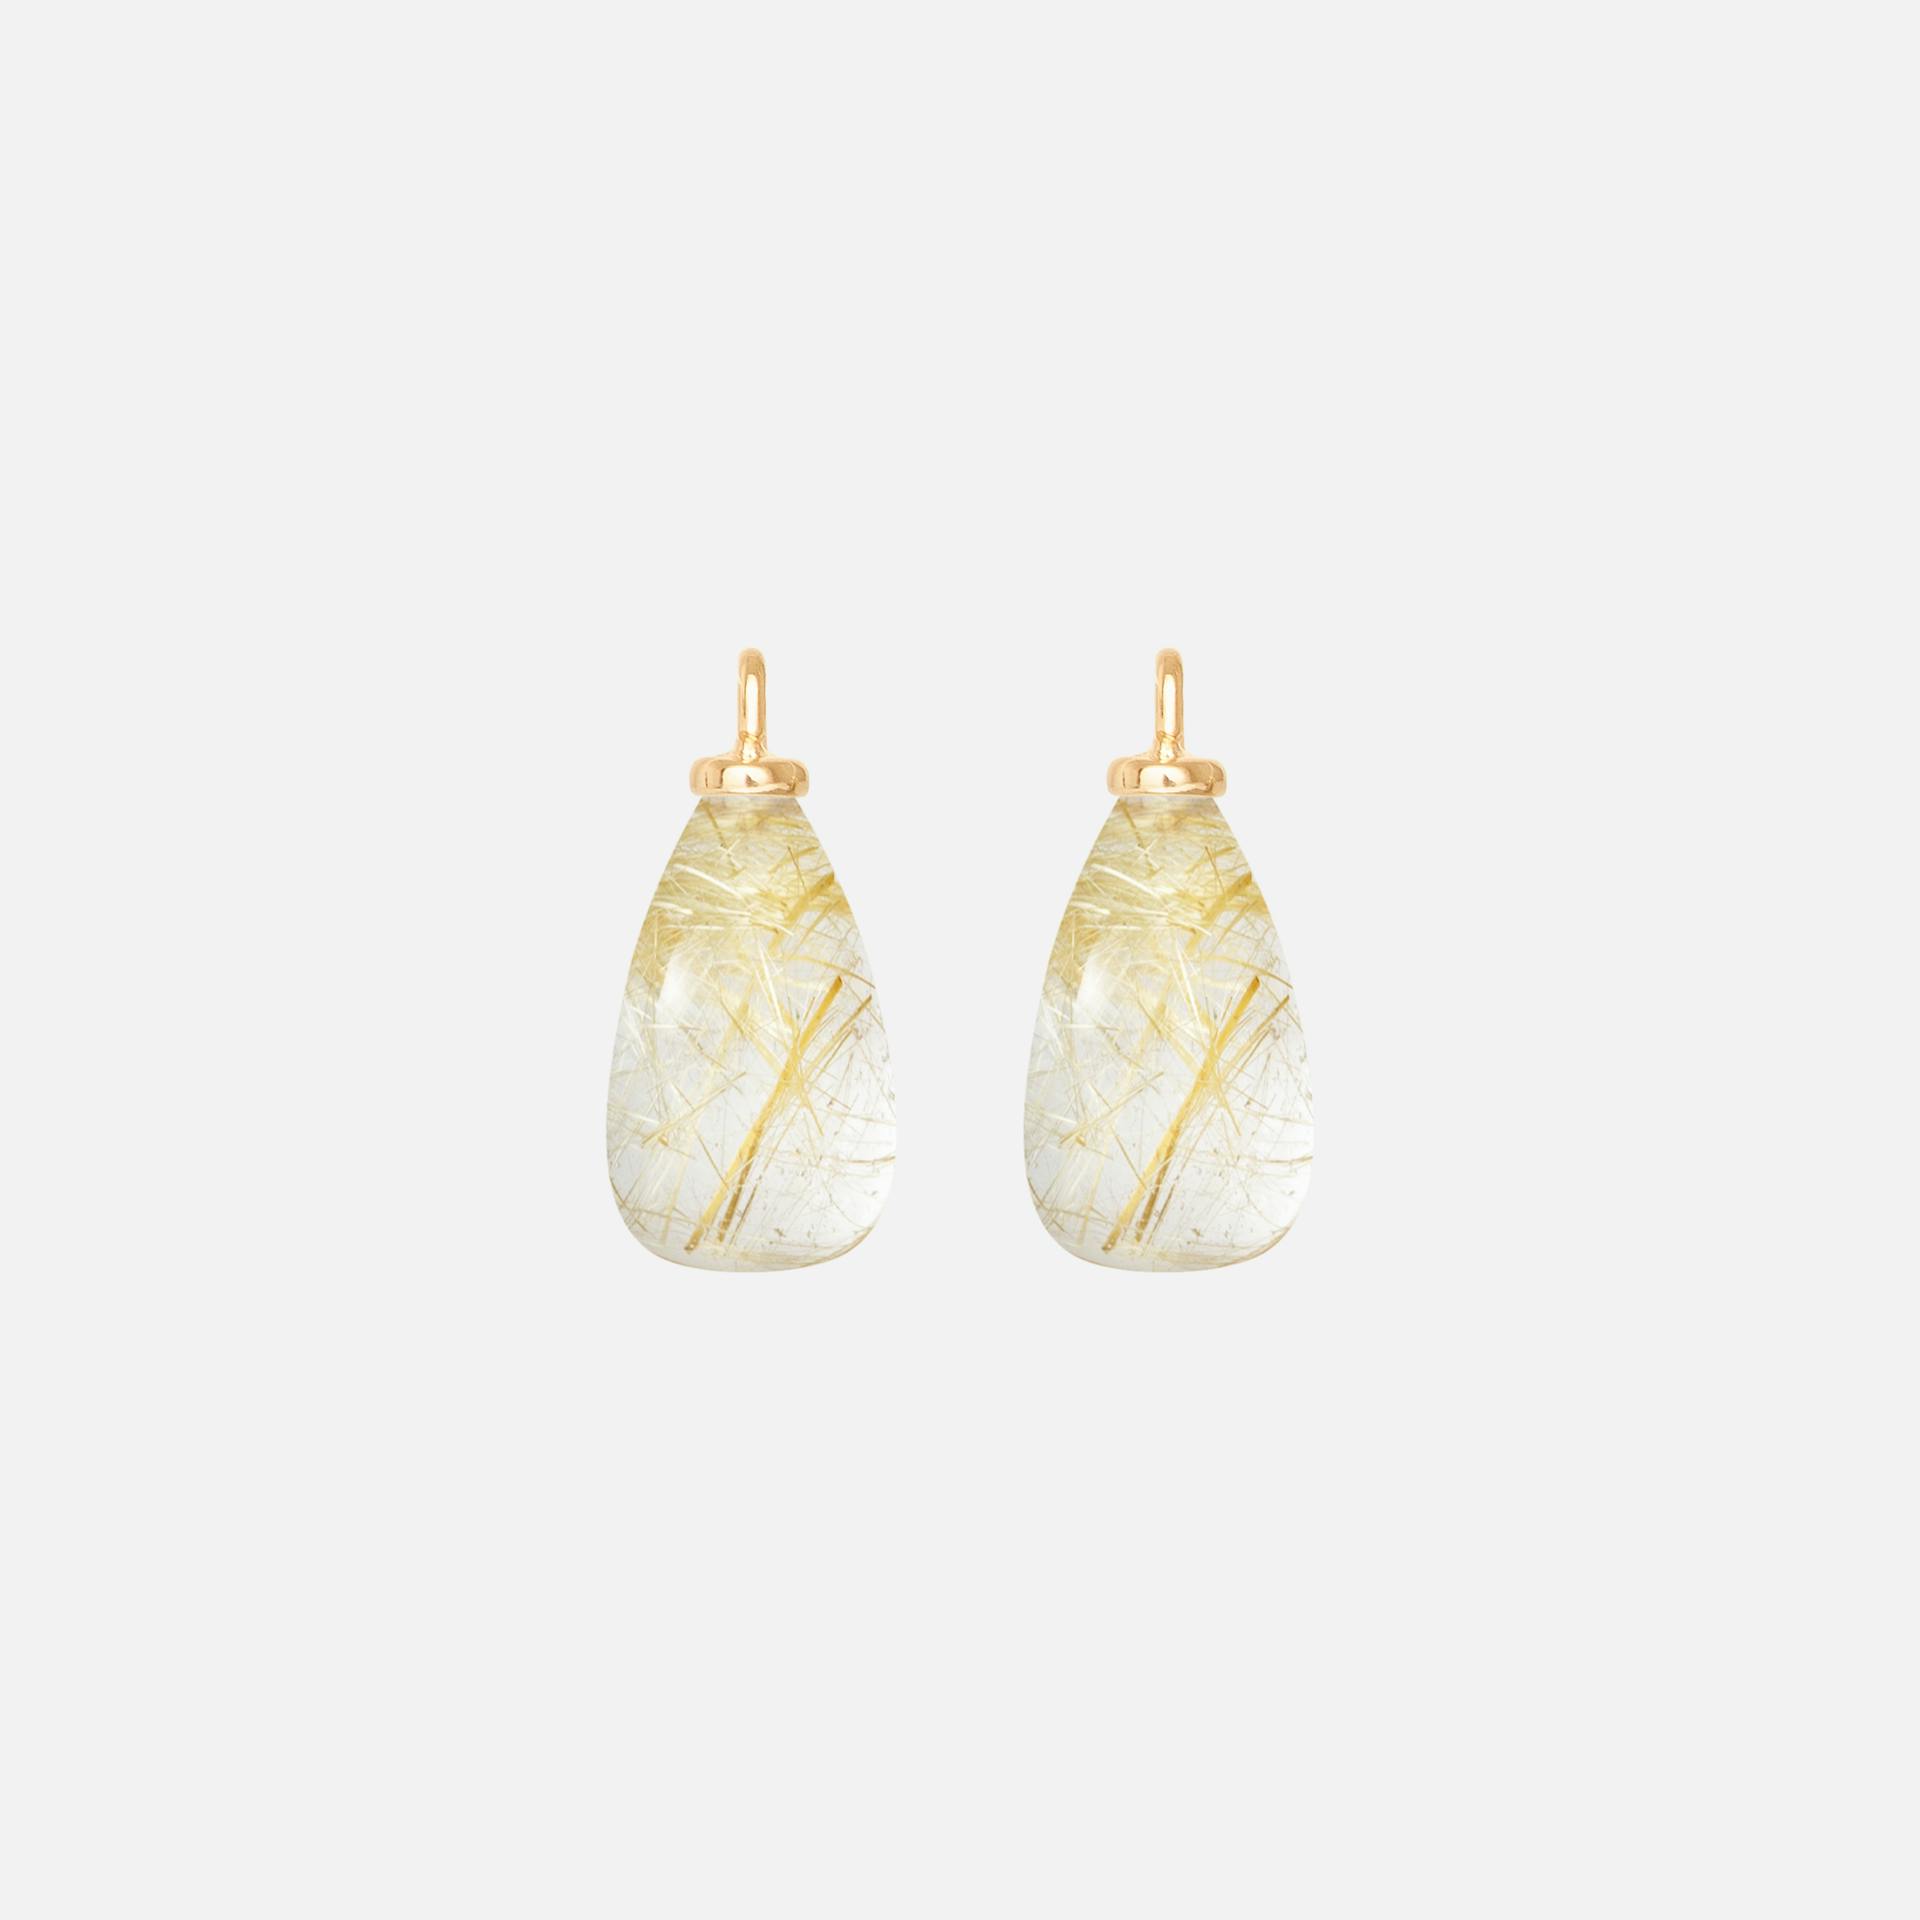 Earring pendant drop 18k gold with rutile quartz